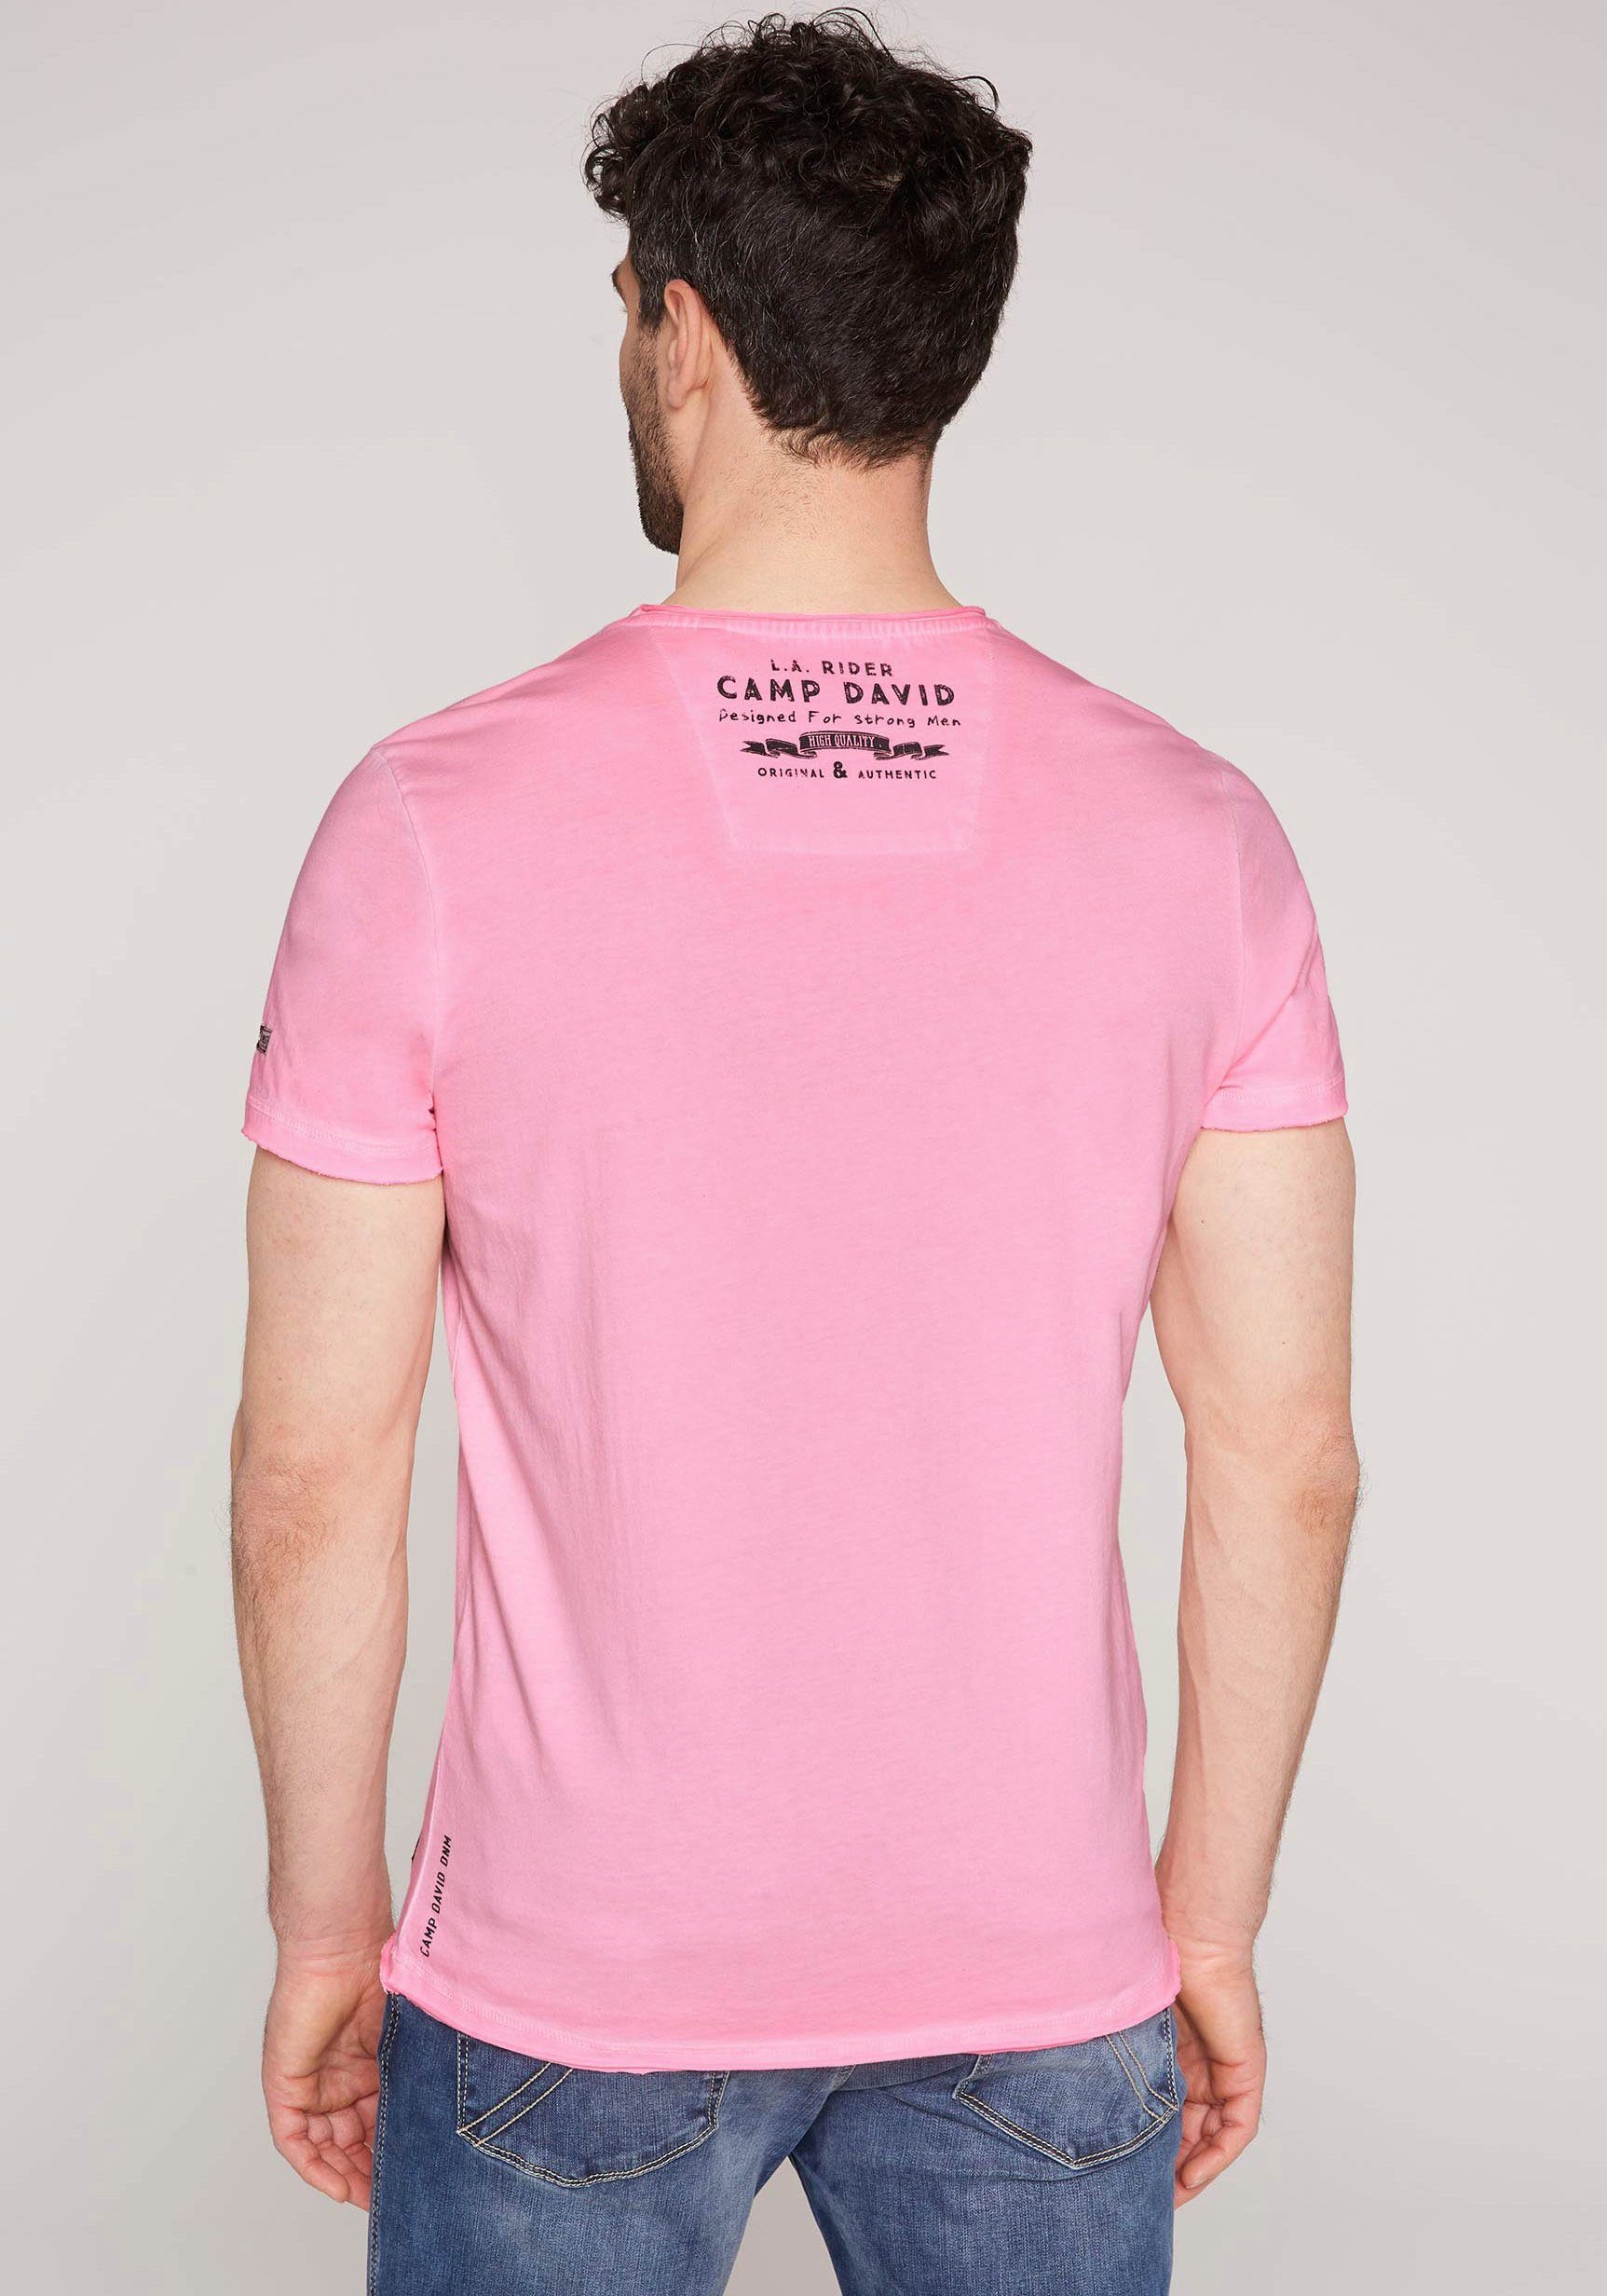 CAMP DAVID pink T-Shirt neon